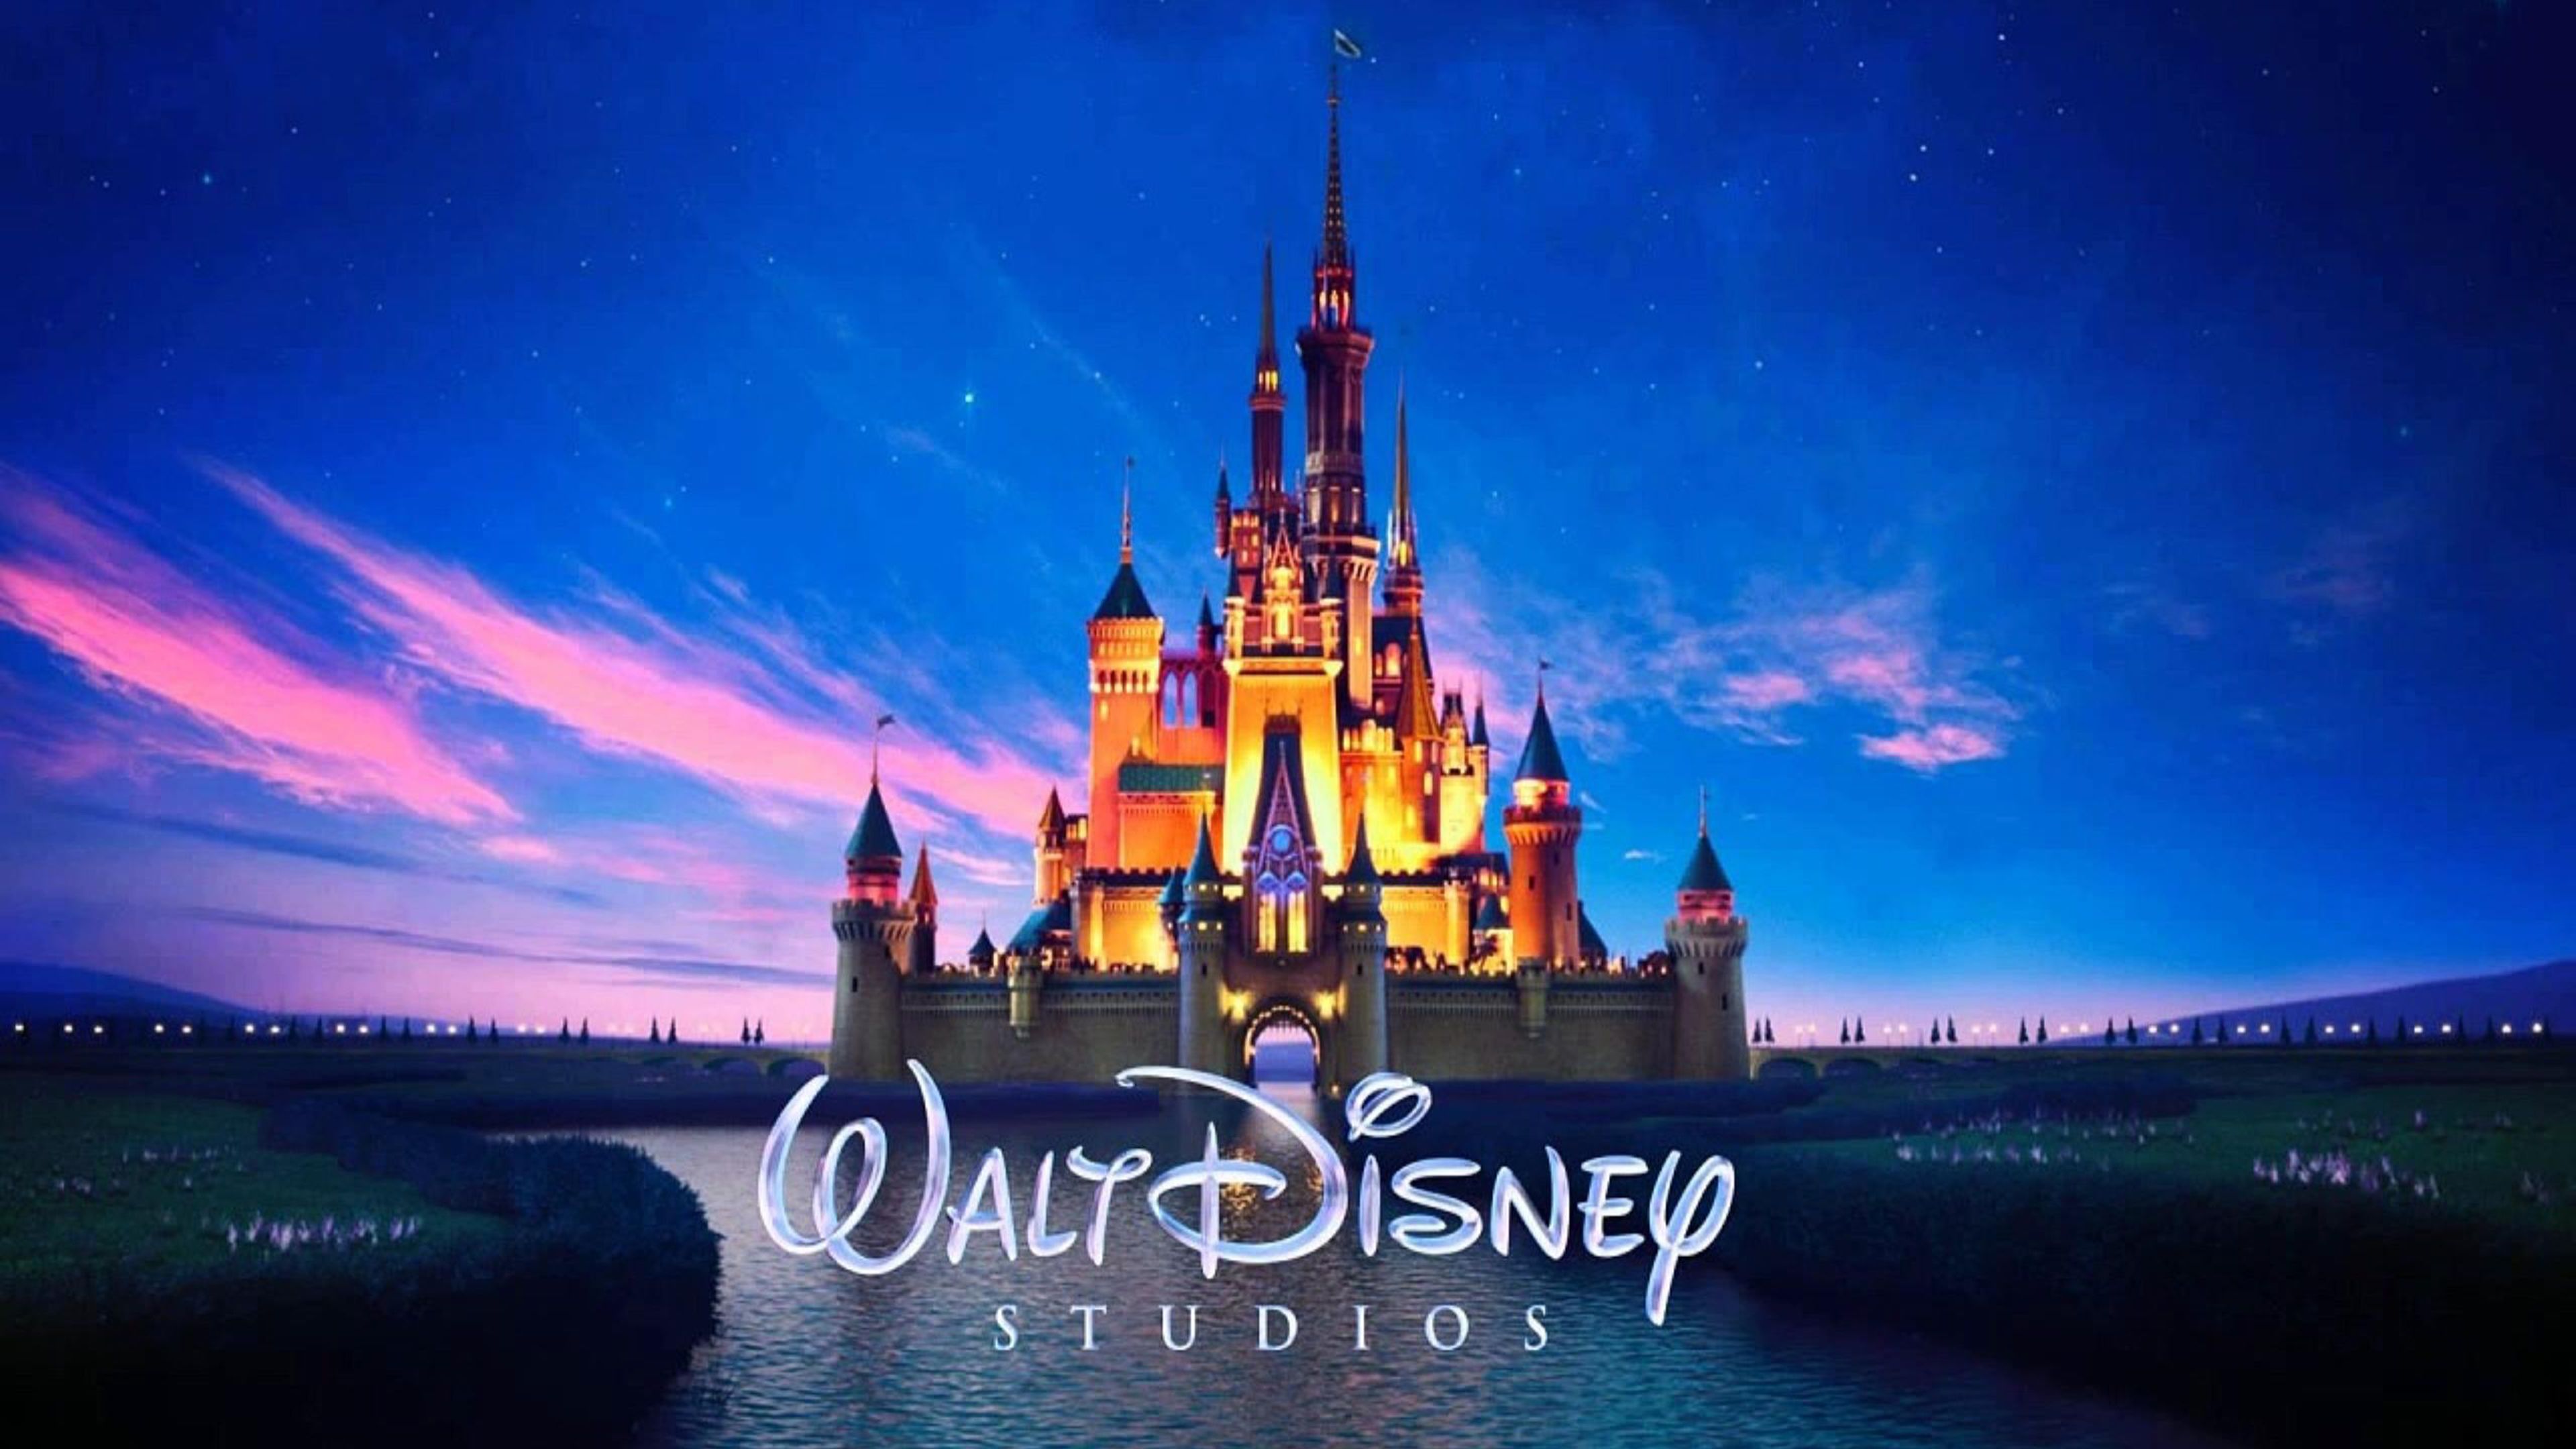 The disney castle logo - Disney